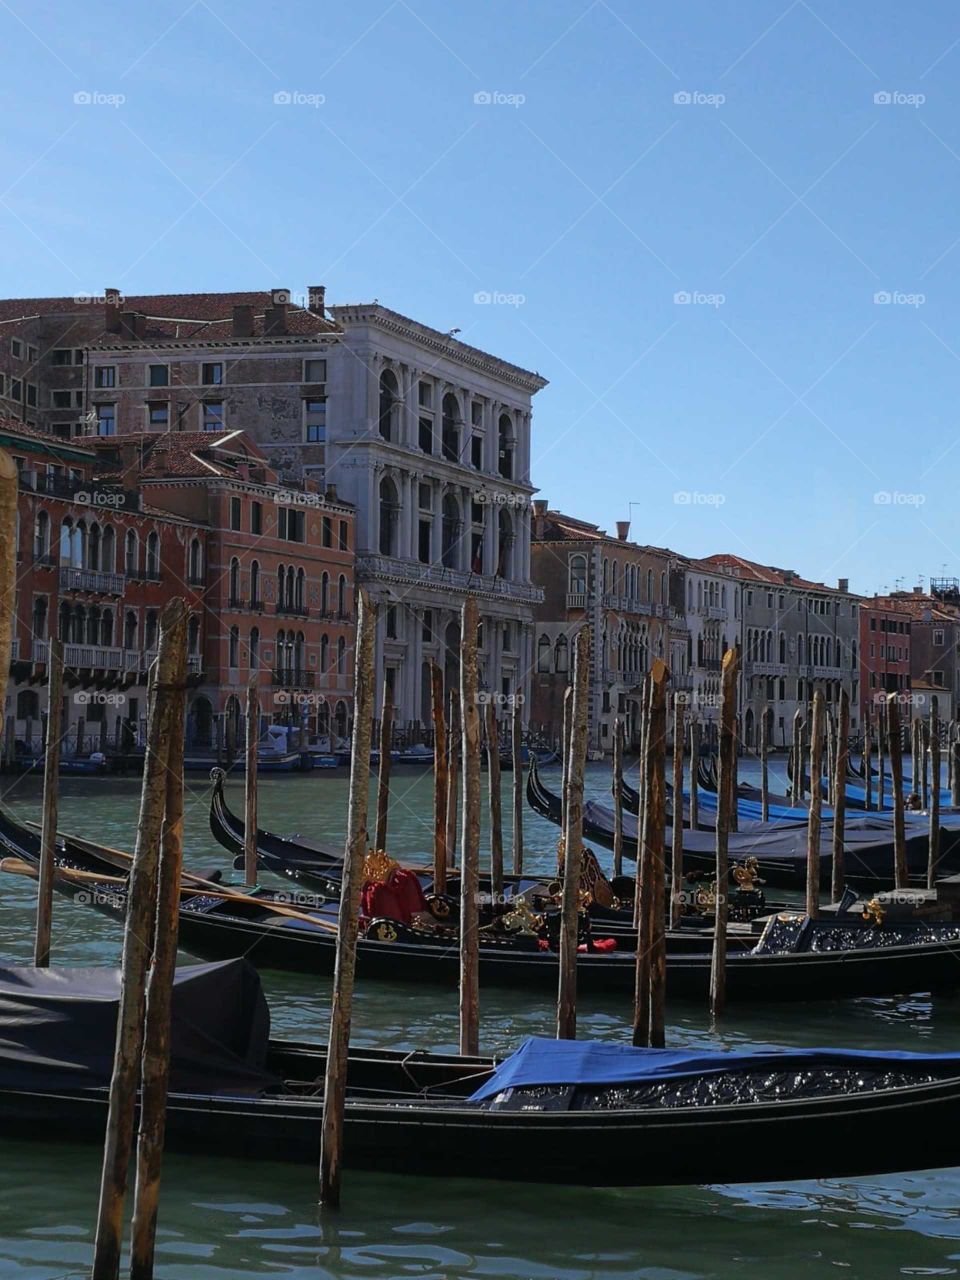 venetian gondolas and buildings.